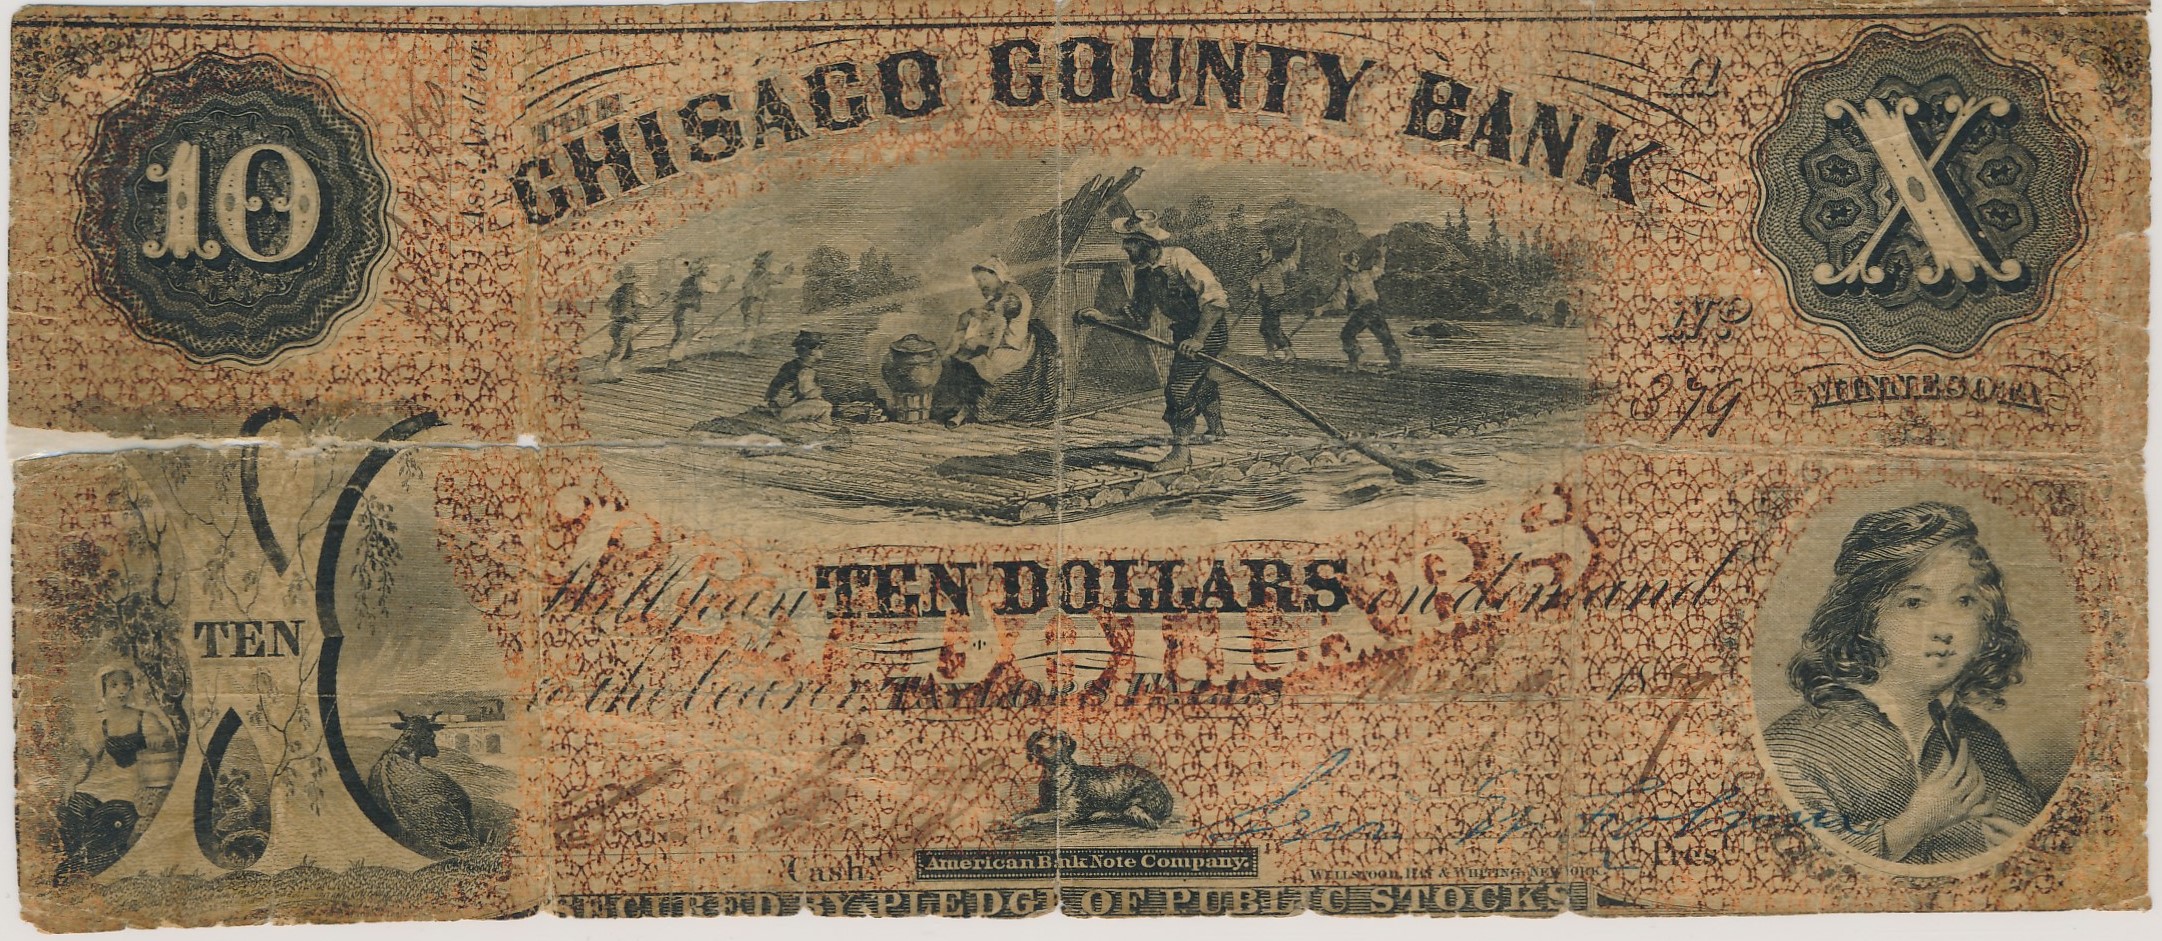 $10 Chisago County Bank